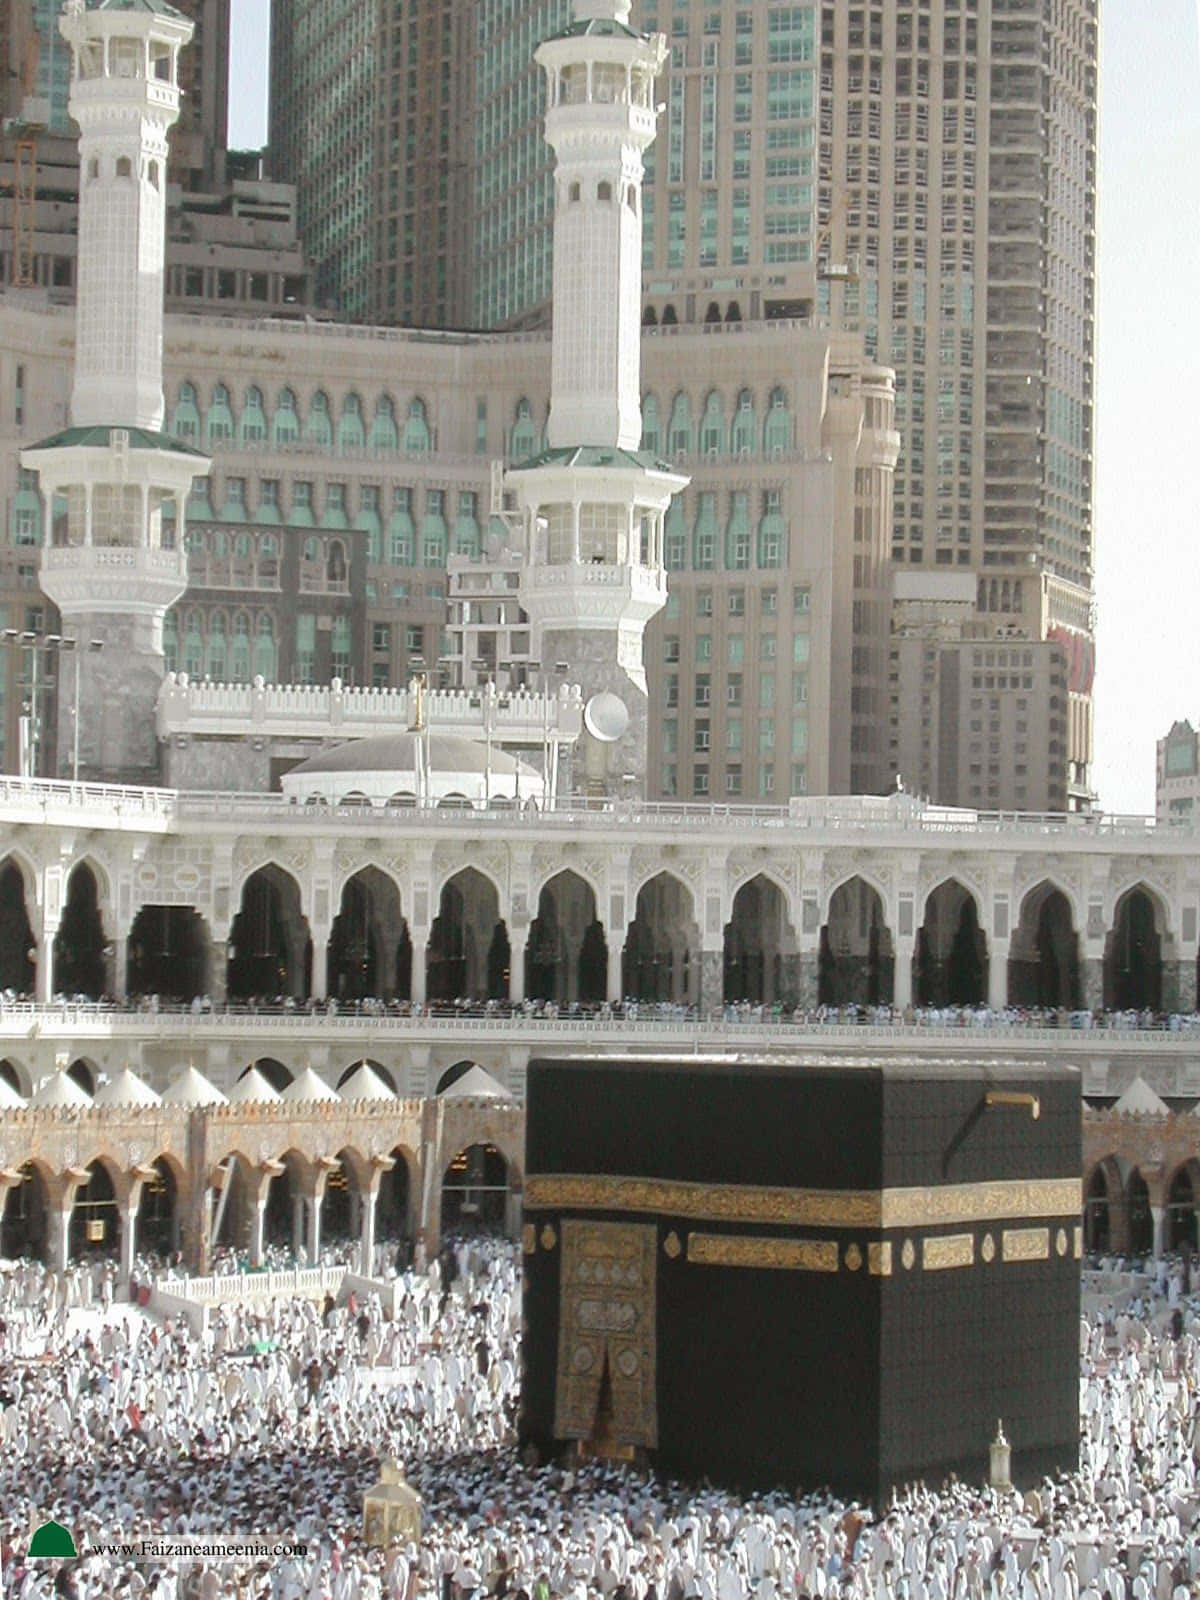 View of the Grand Mosque in Makkah, Saudi Arabia